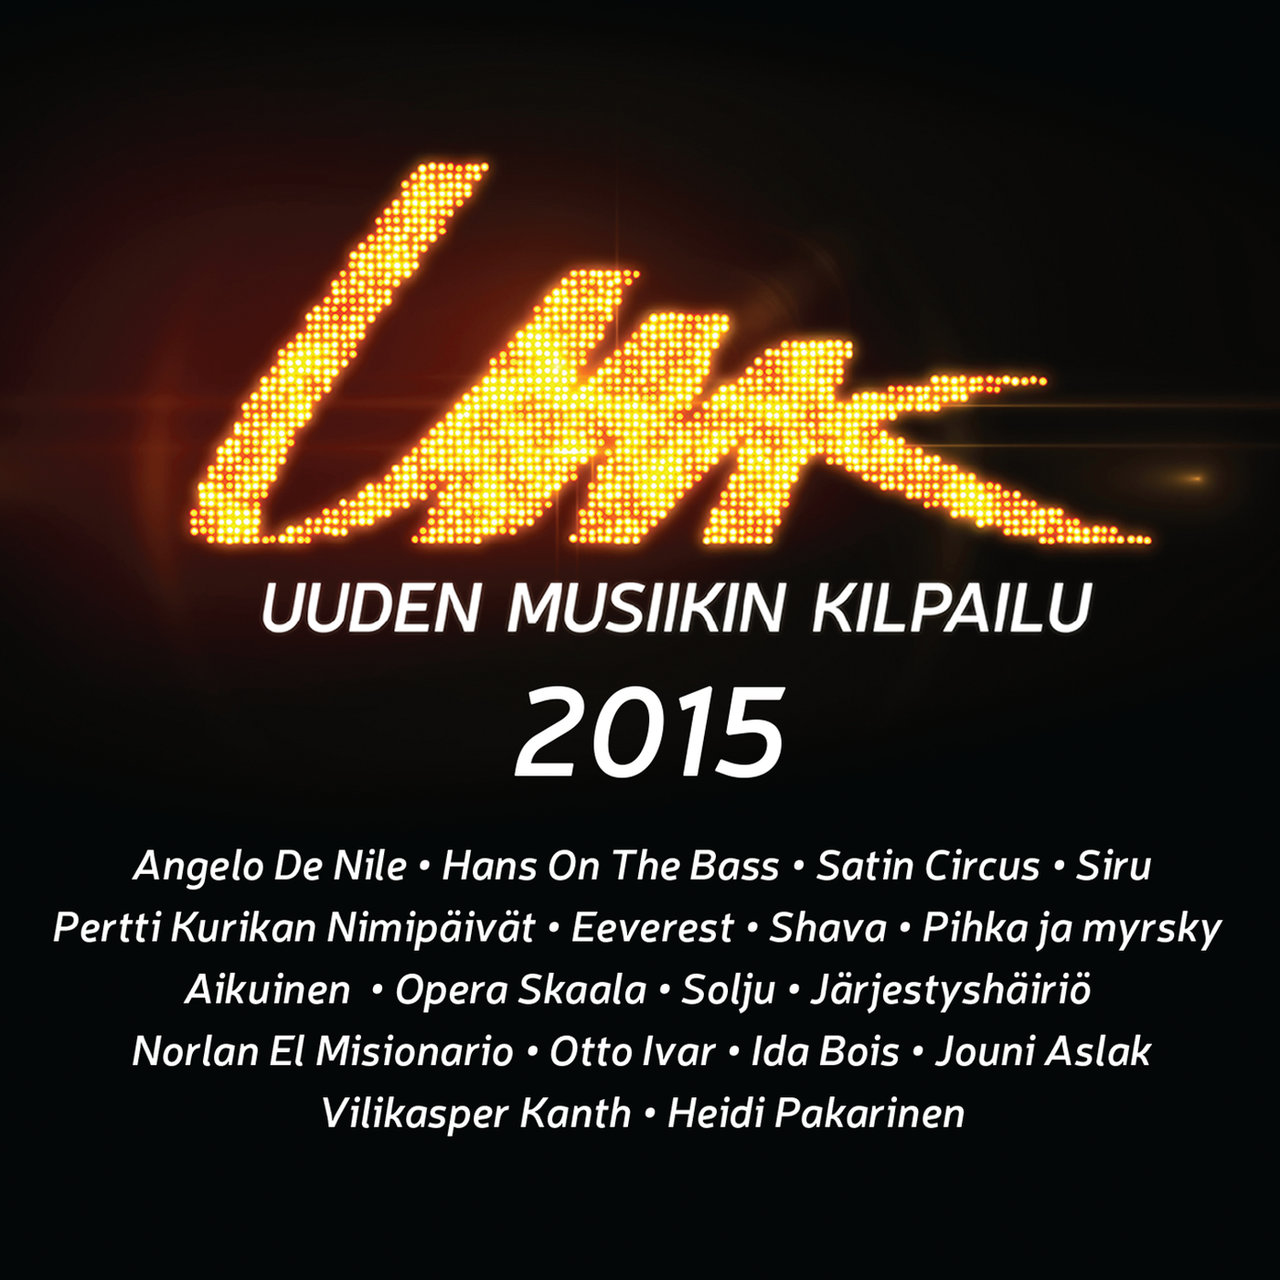 Finland 🇫🇮 in the Eurovision Song Contest Uuden Musiikin Kilpailu 2015 cover artwork